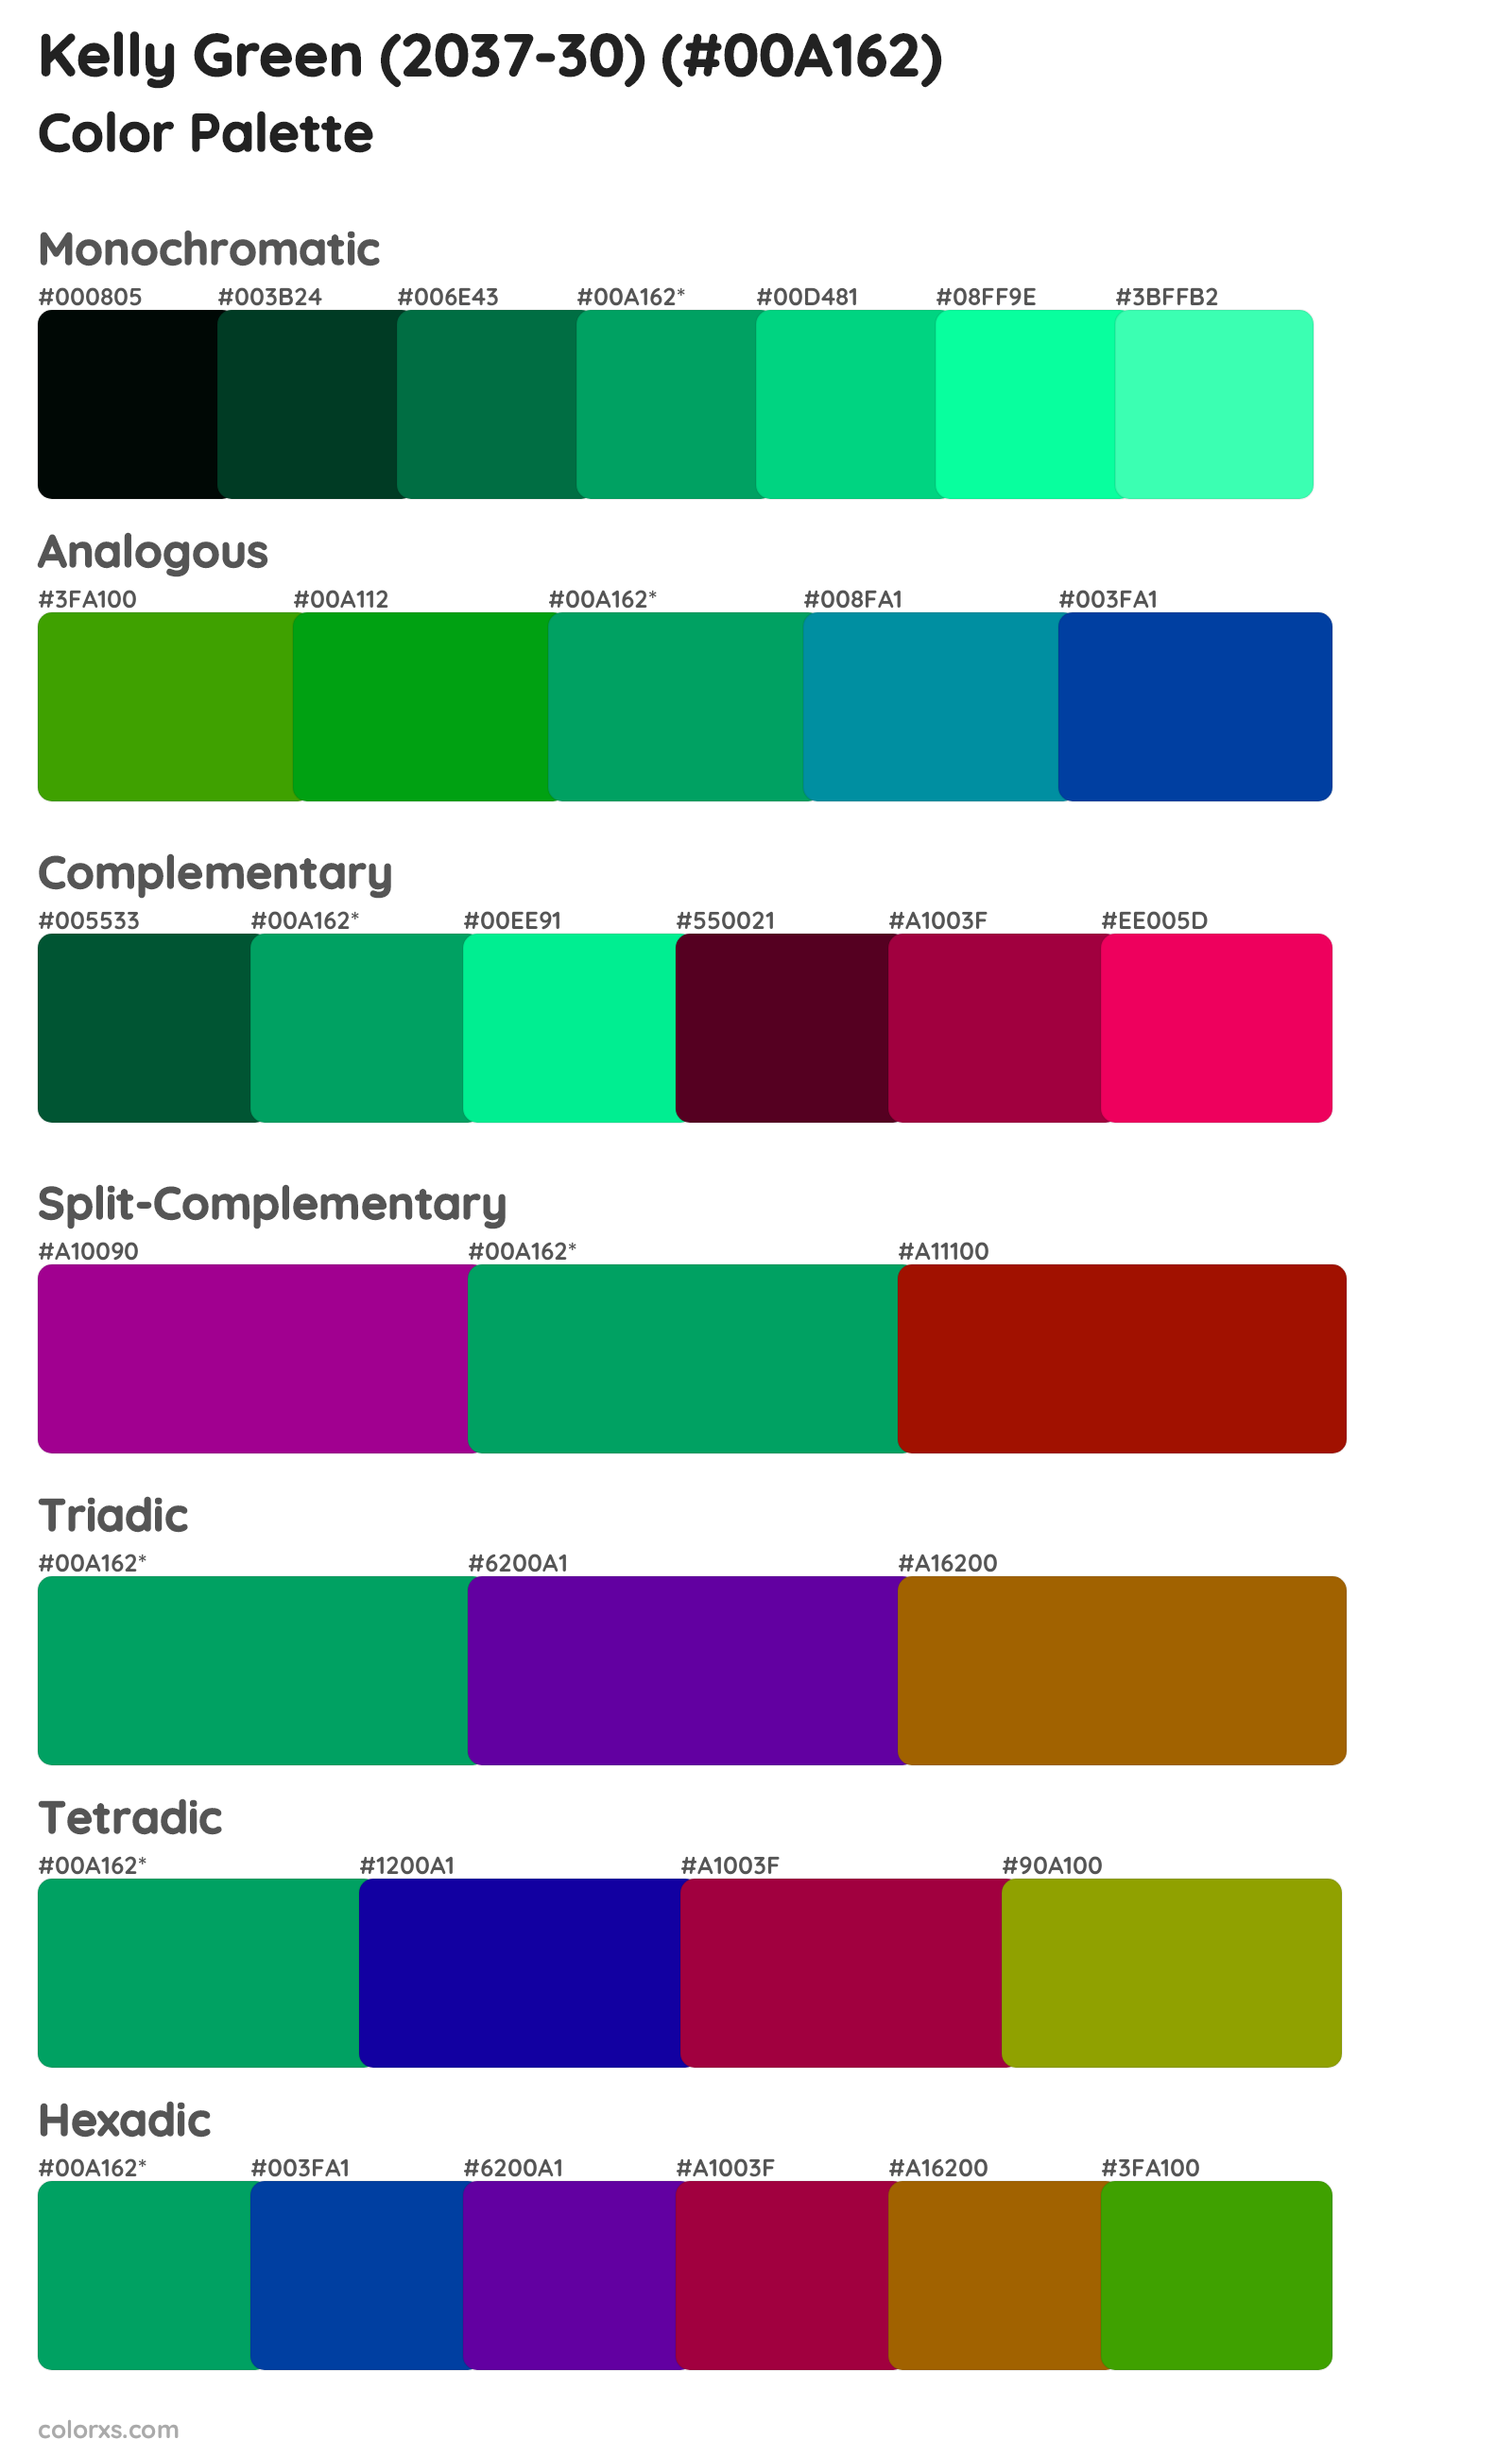 Kelly Green (2037-30) Color Scheme Palettes